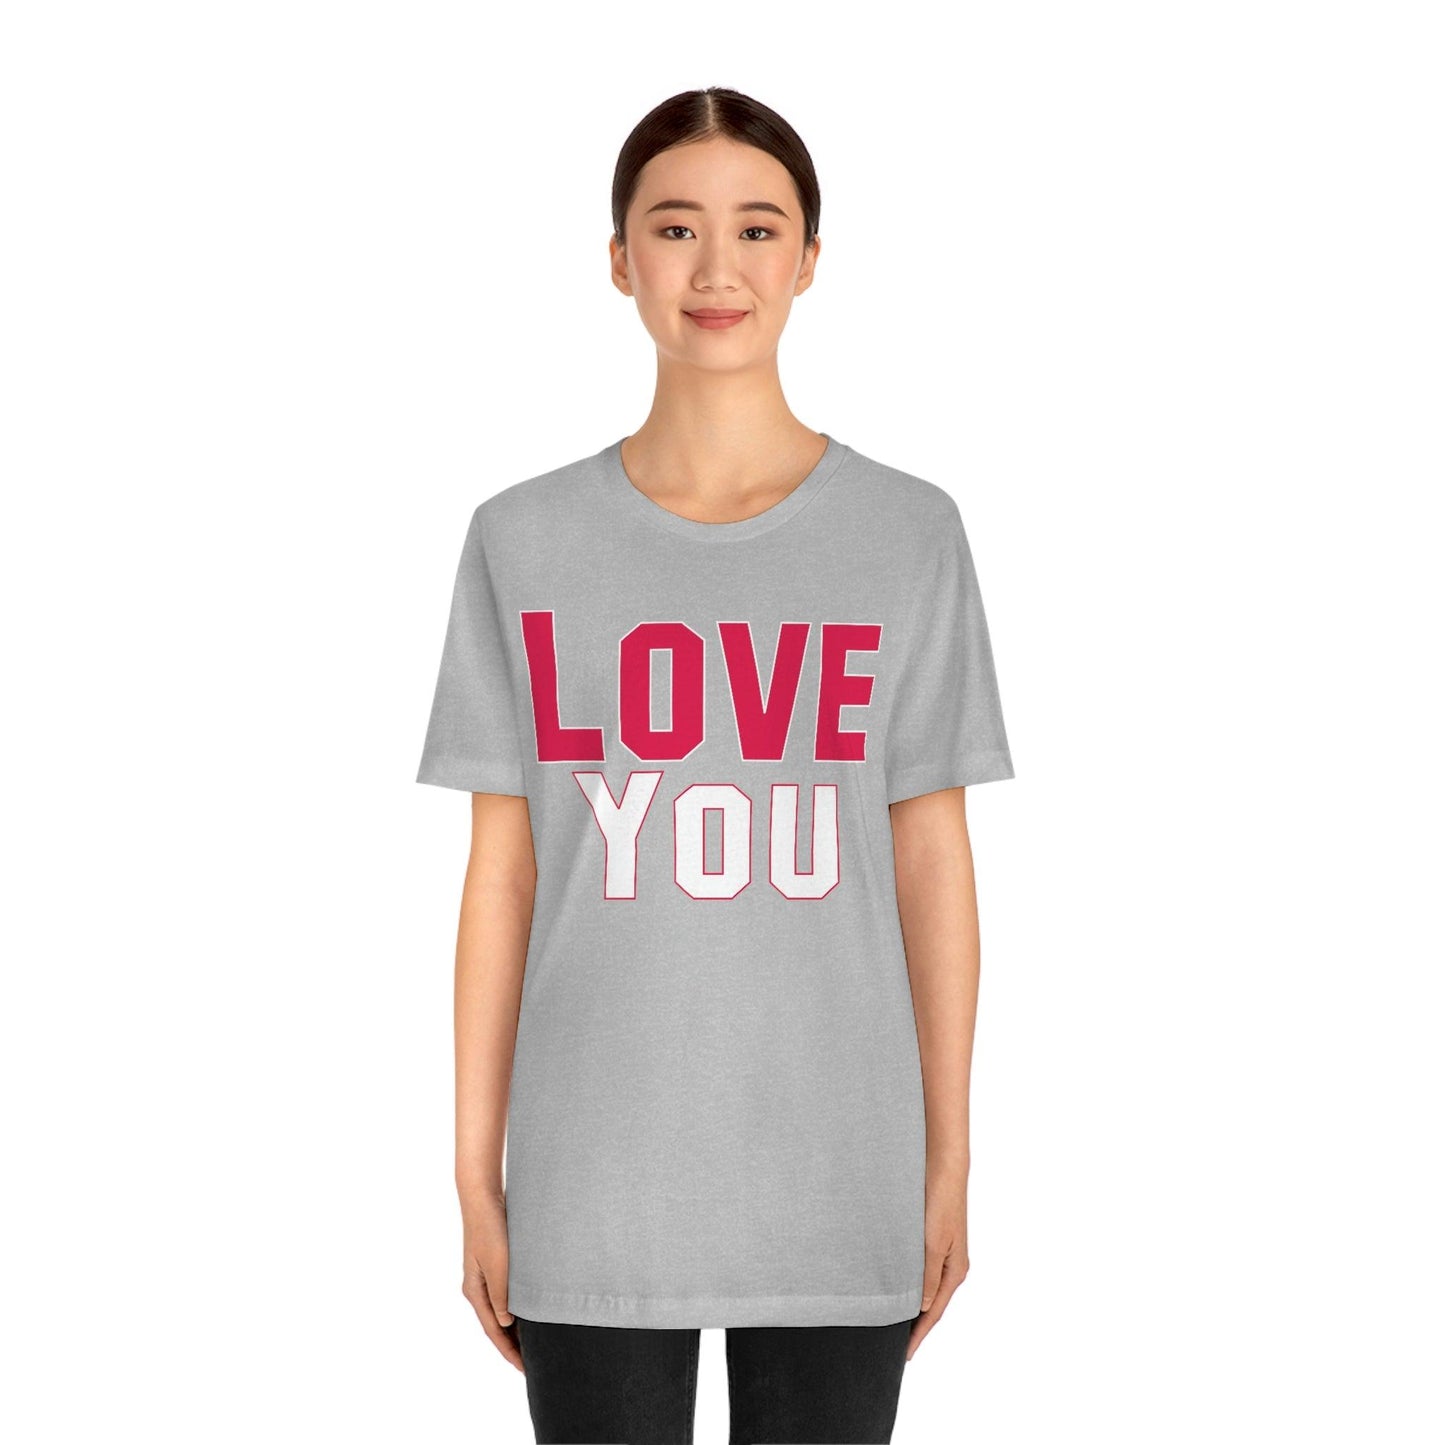 Love you T-shirt - Giftsmojo